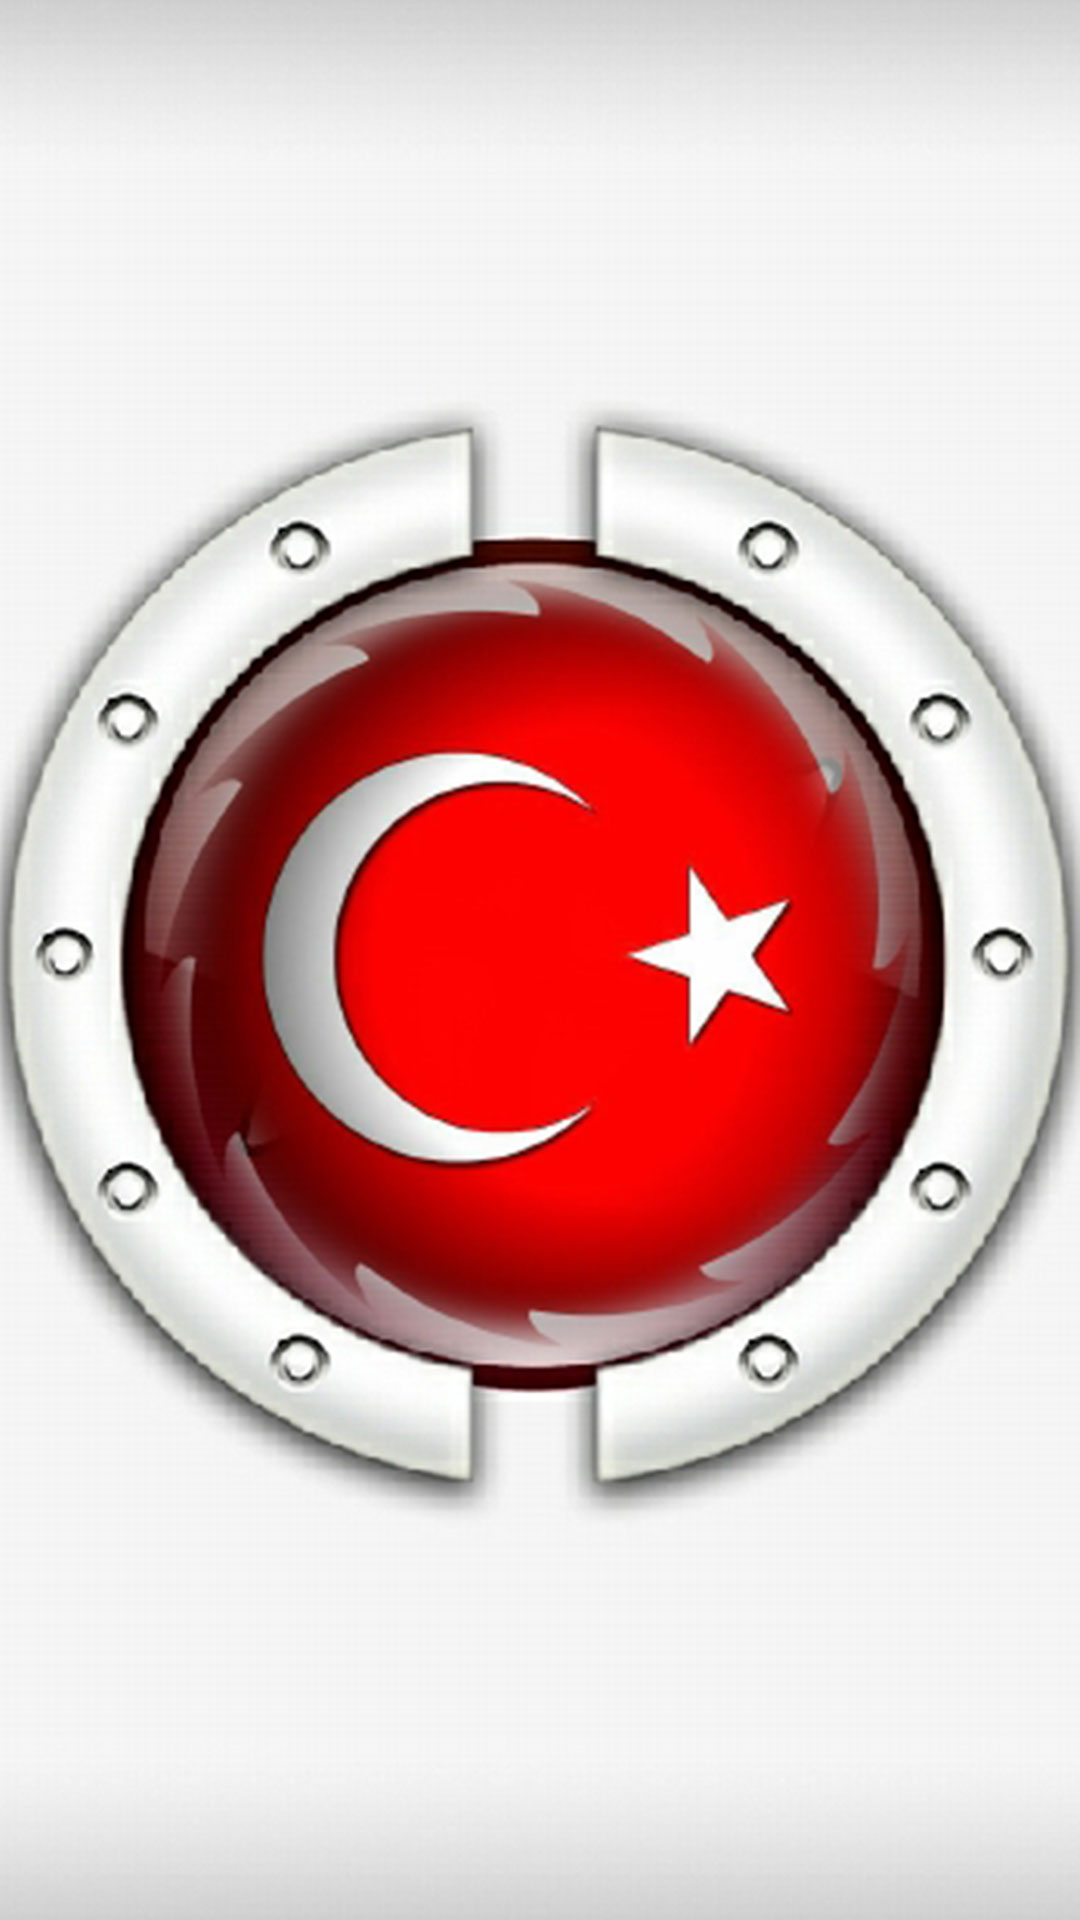 Turk bayragi telefon duvar kagitlari 19